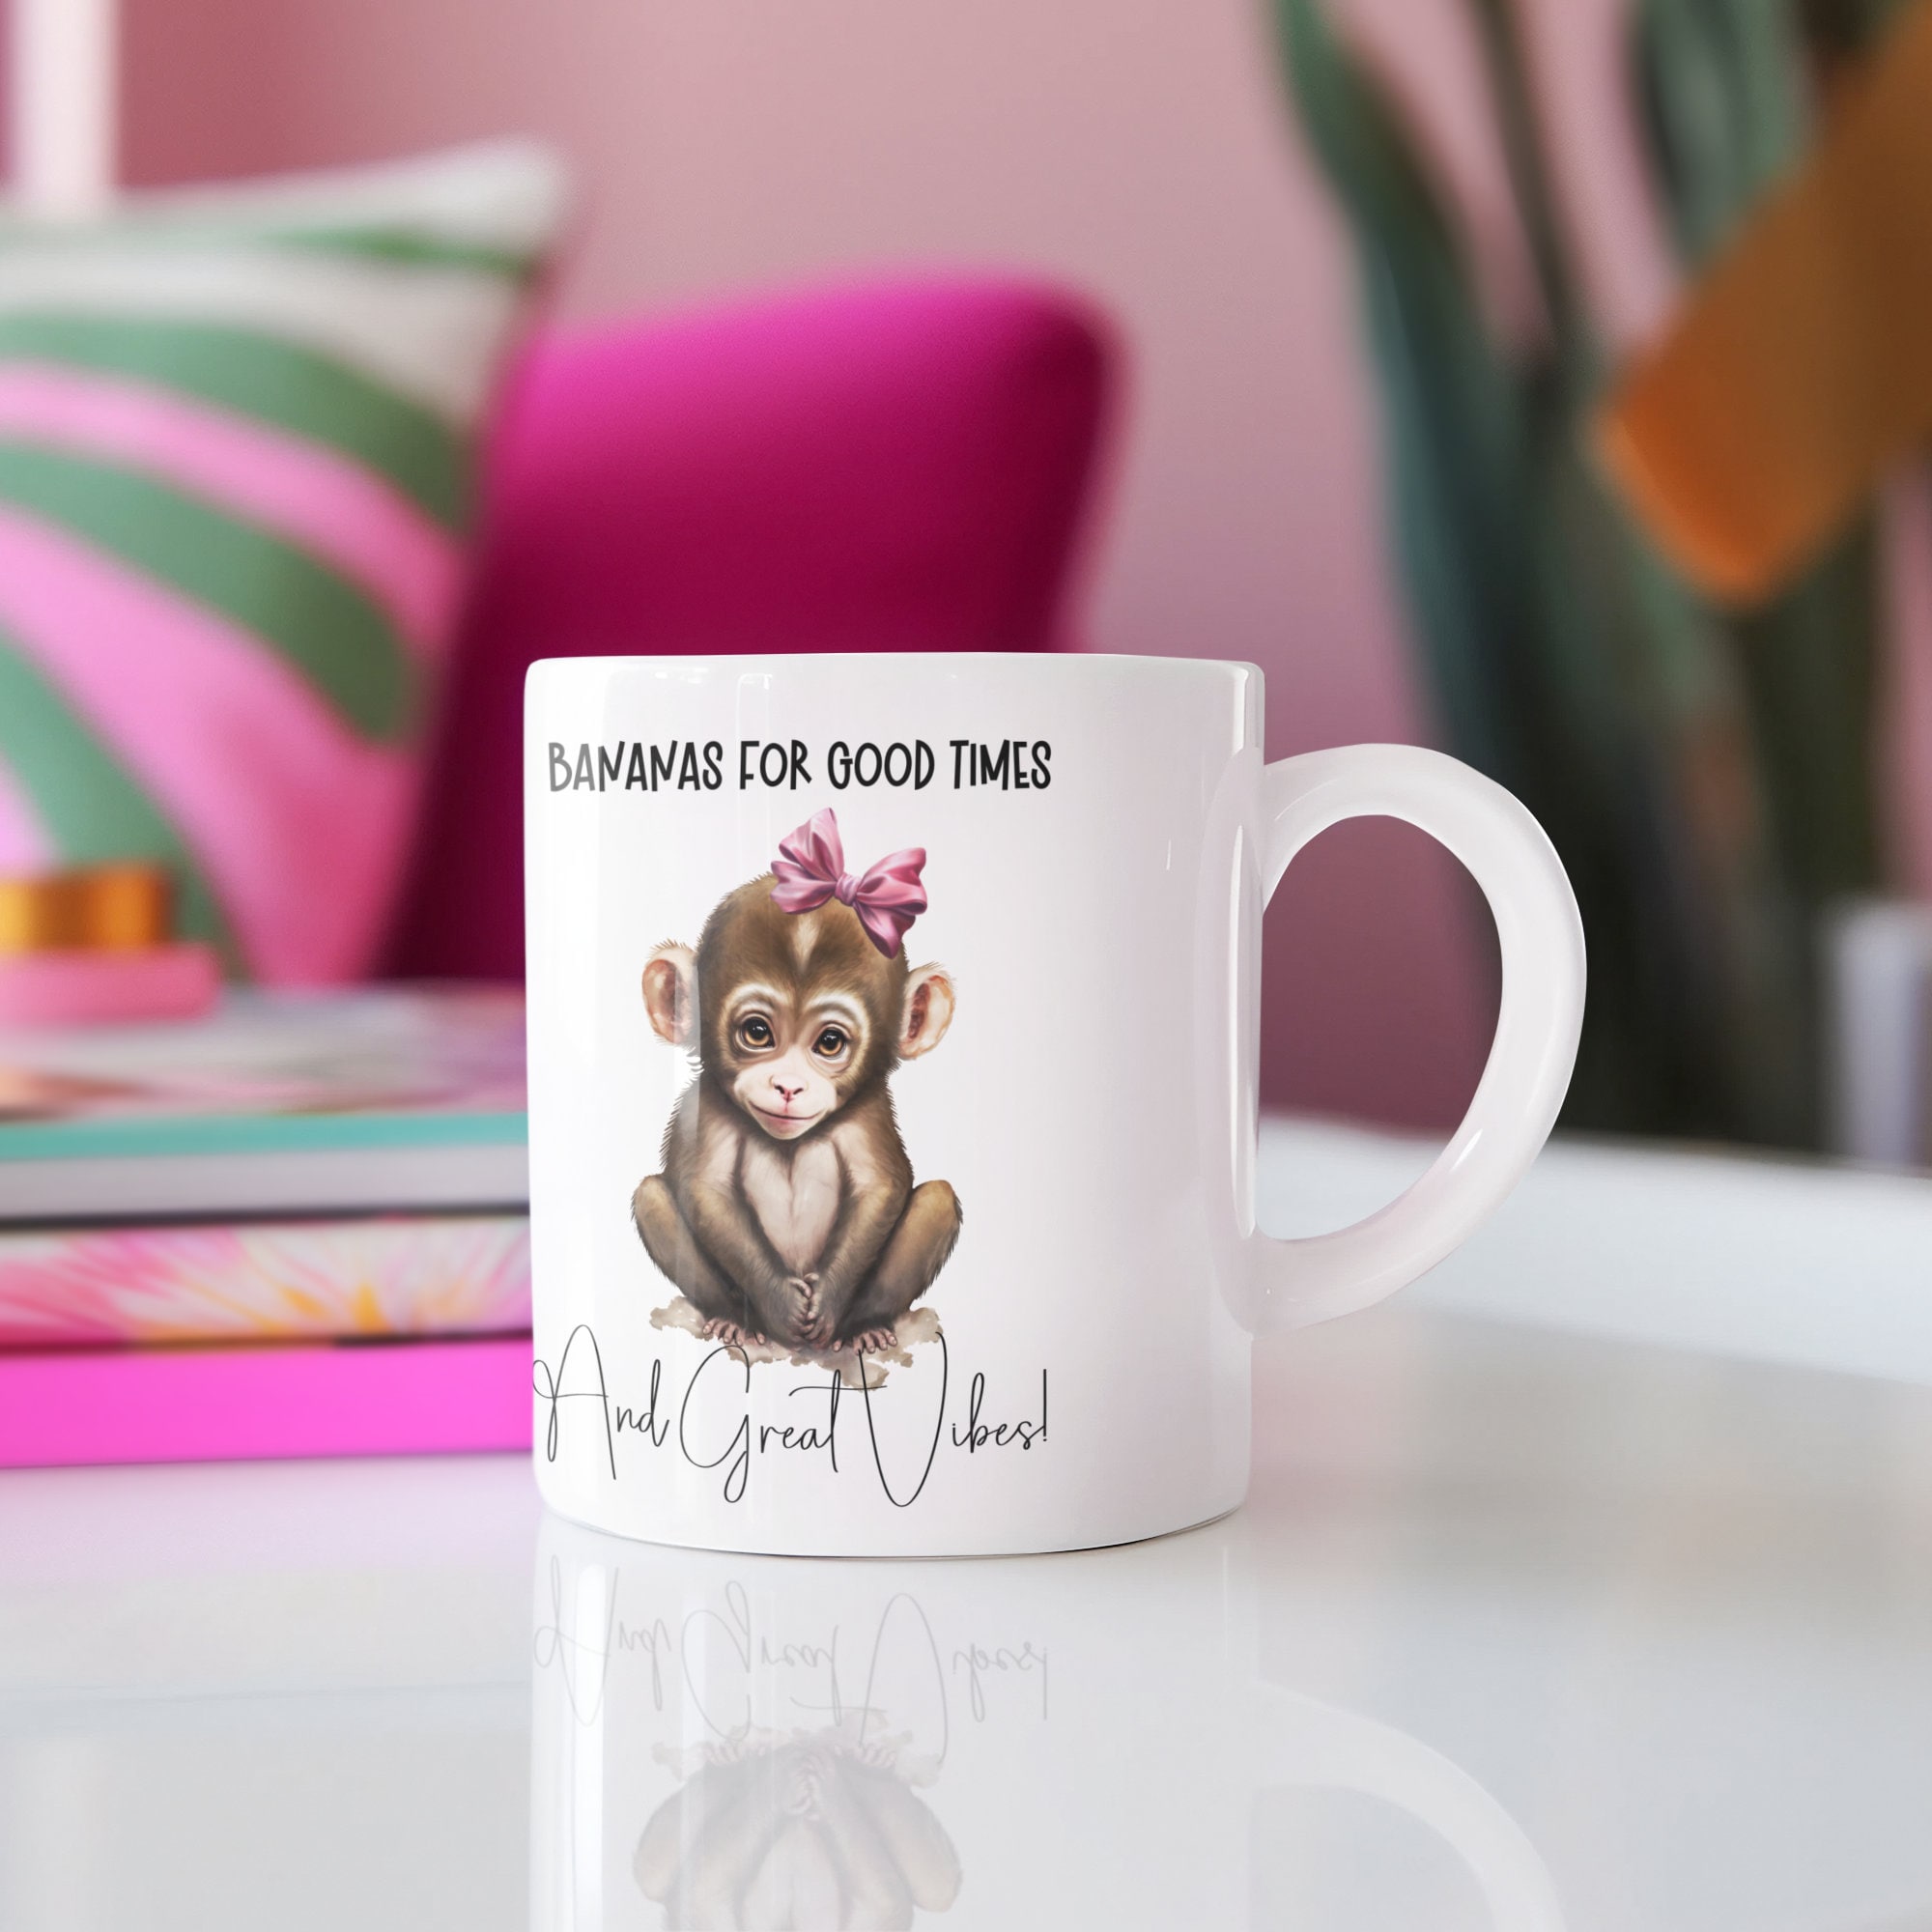 Artic monkeys Coffee Mug for Sale by apstarz